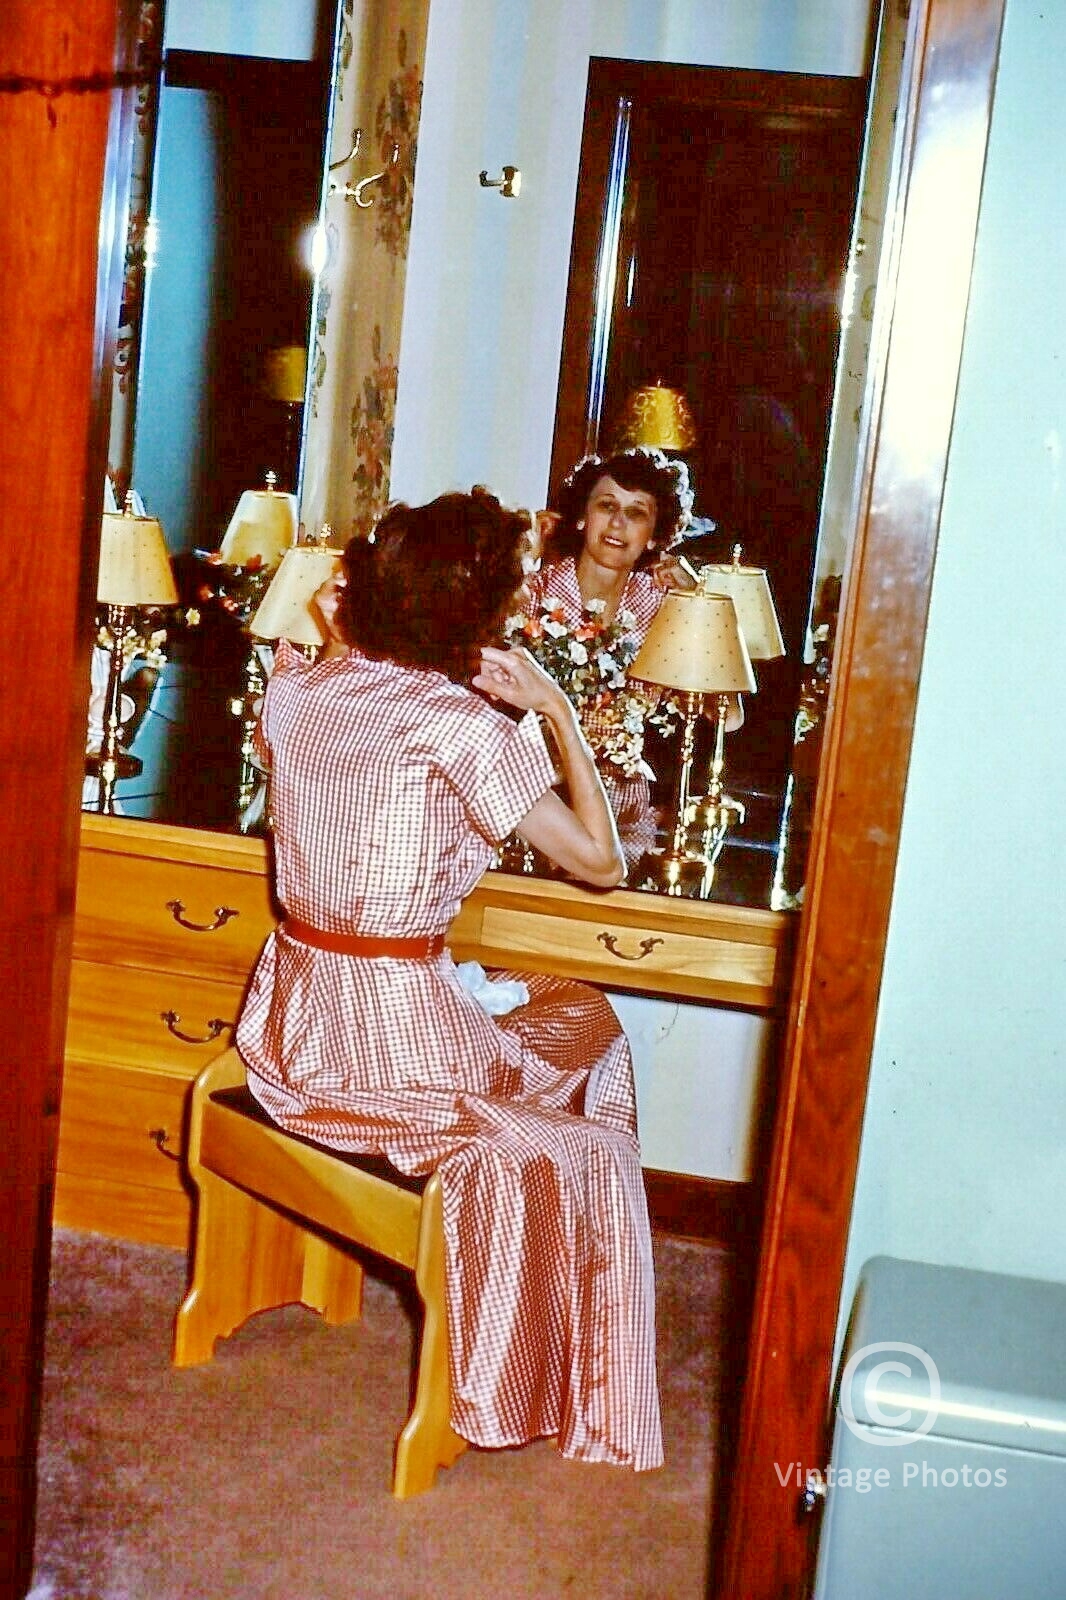 1950s American Fashion - Woman Mirror